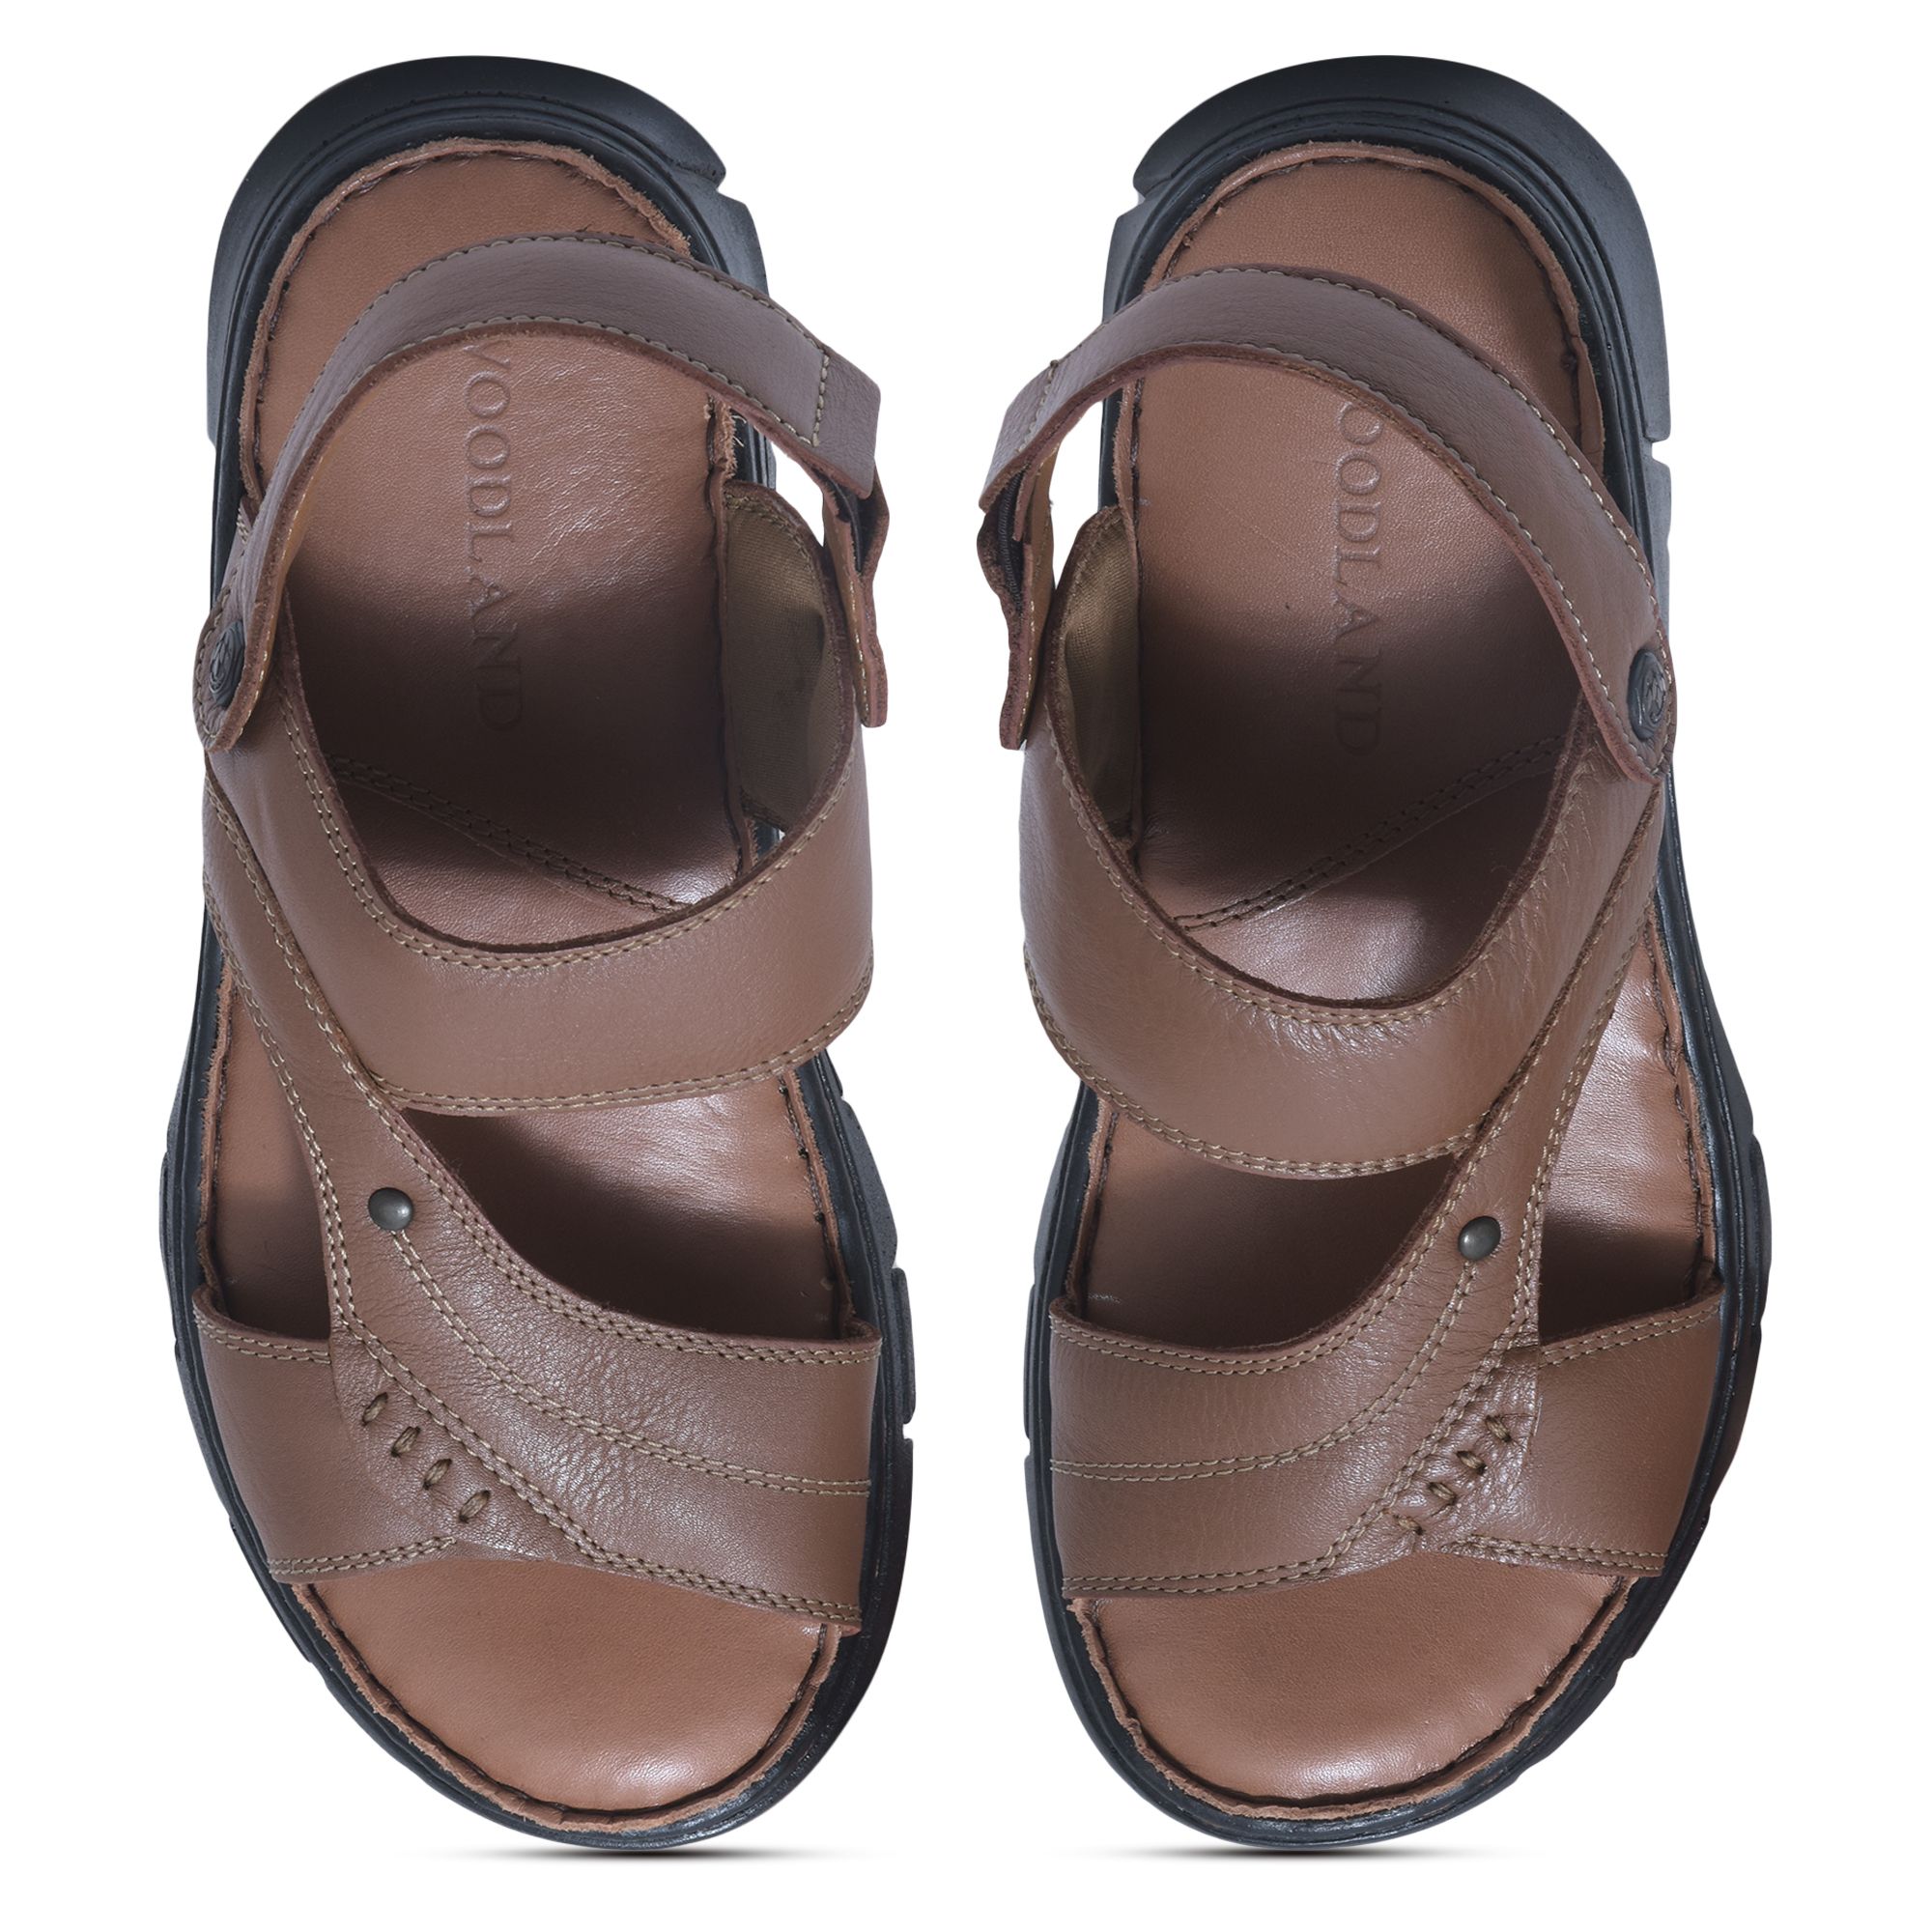 Tan/Brown leather sandal for men